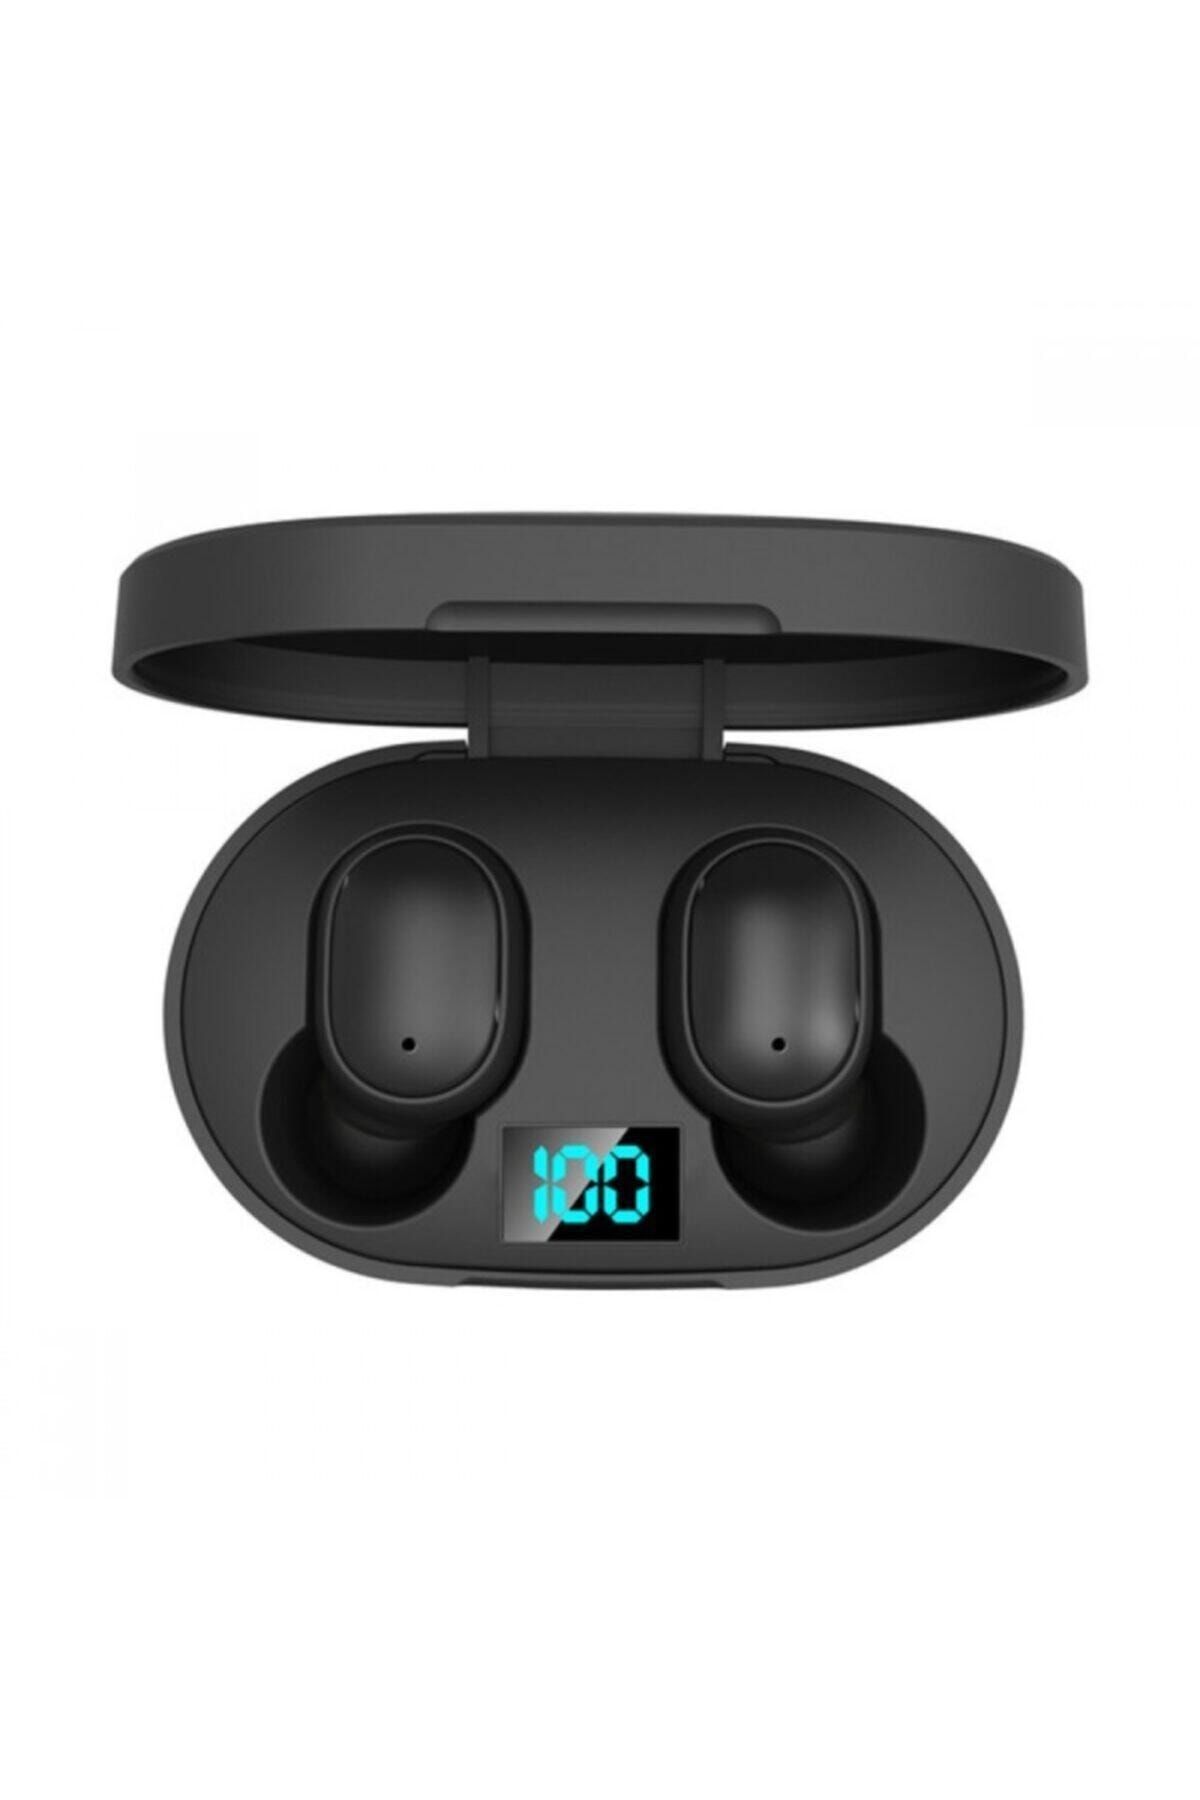 Polygold E6s True Kablosuz Kulaklık Dijital Göstergeli Bluetooth Kulaklık 5.0v-siyah Renk